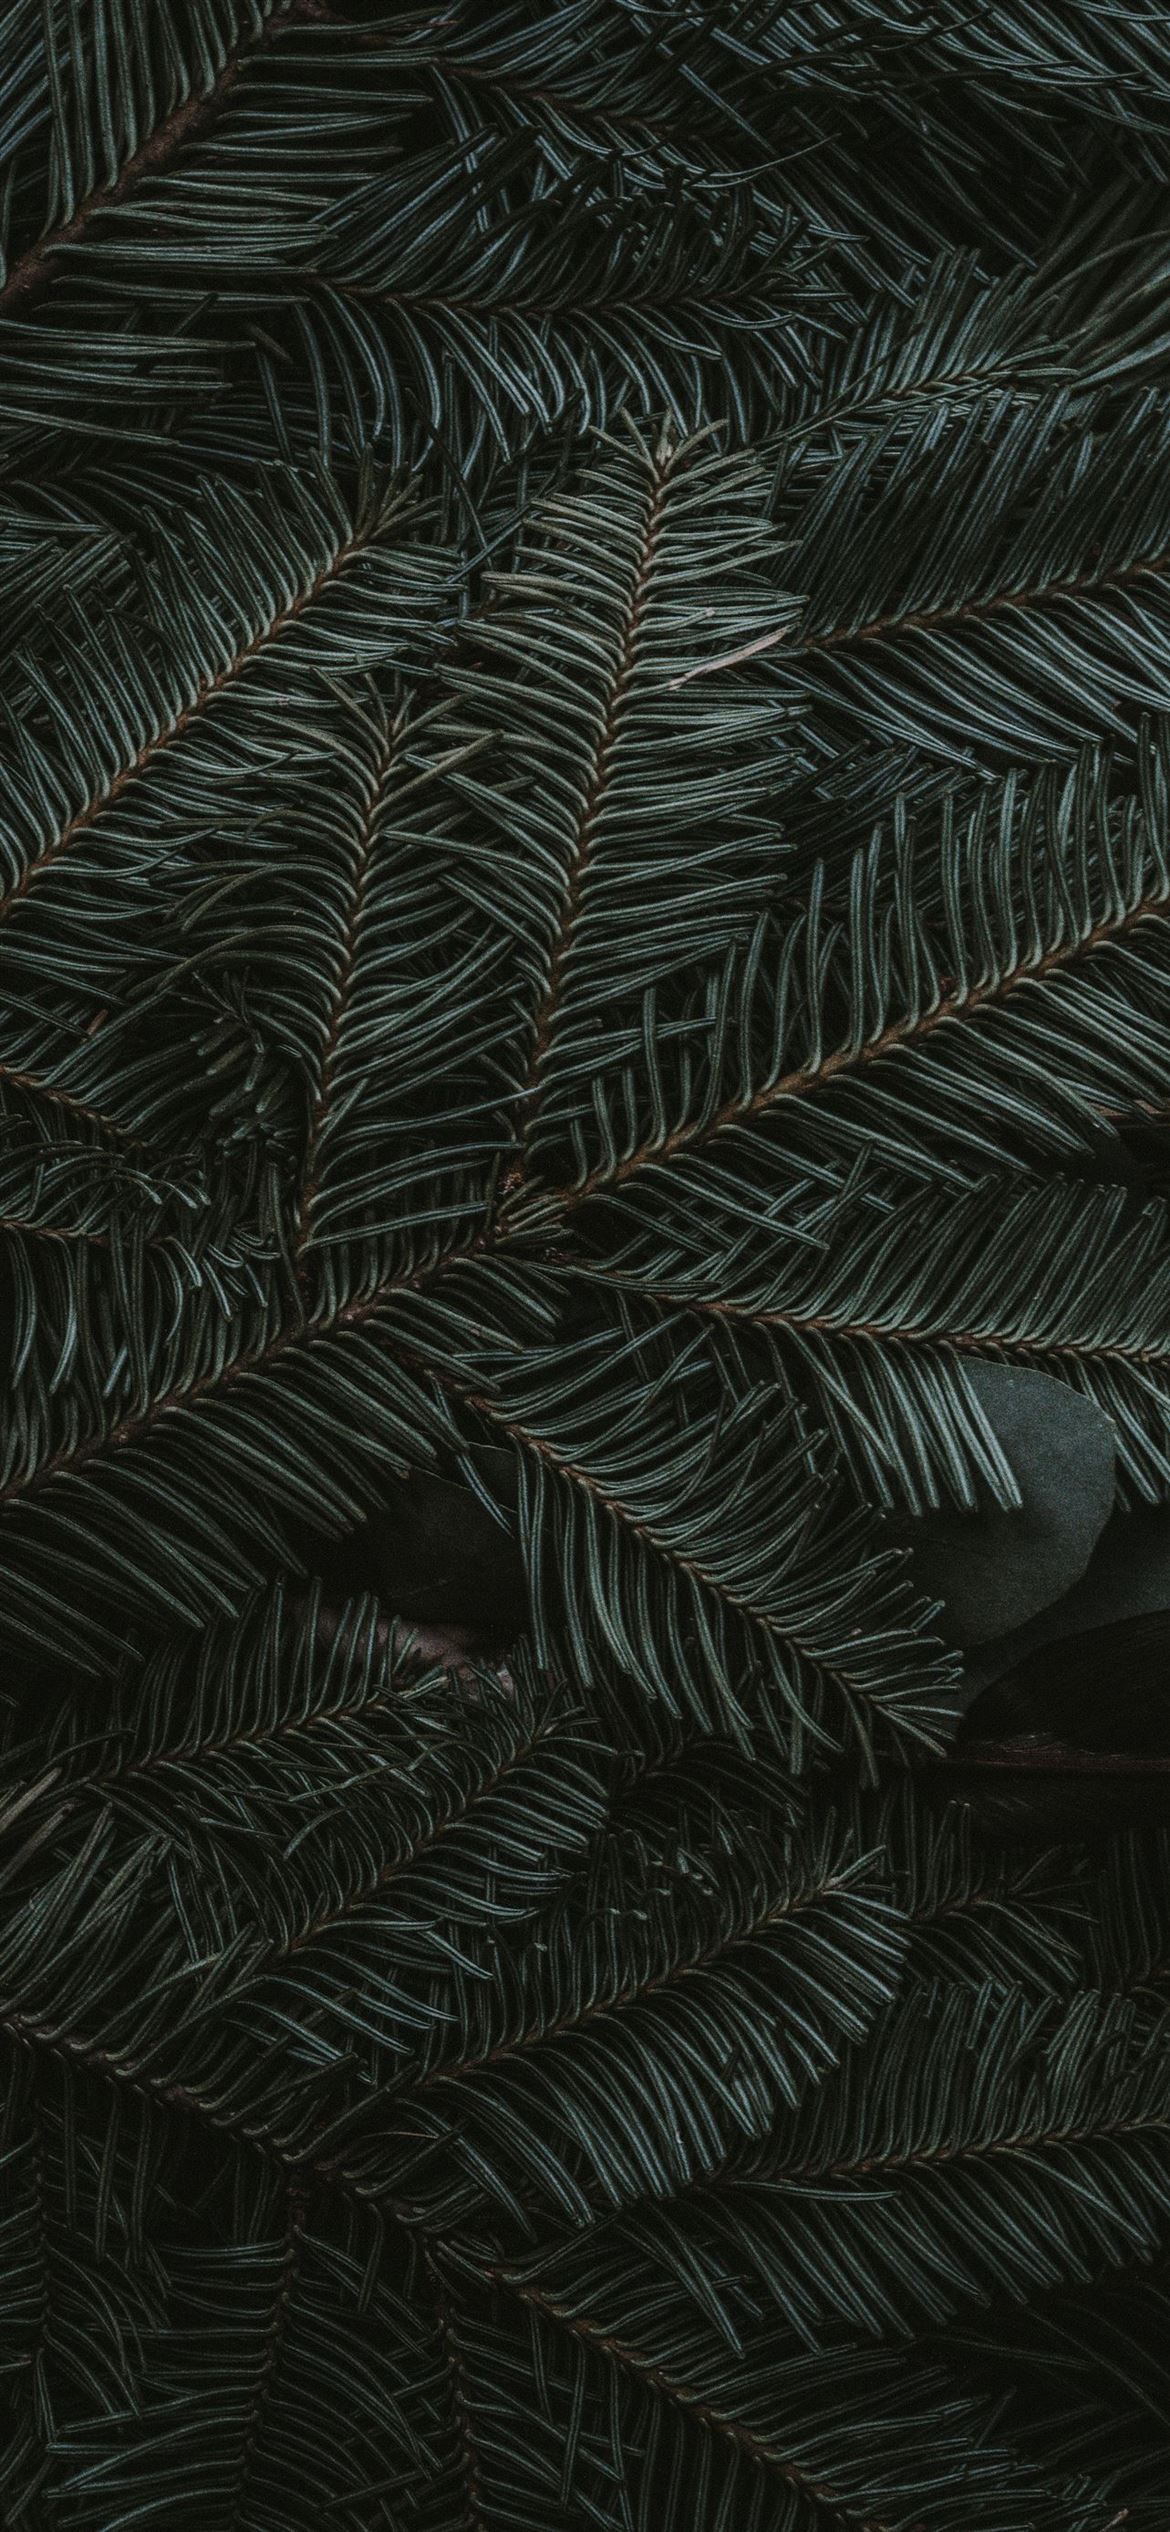 A dark green fern leaf background - Leaves